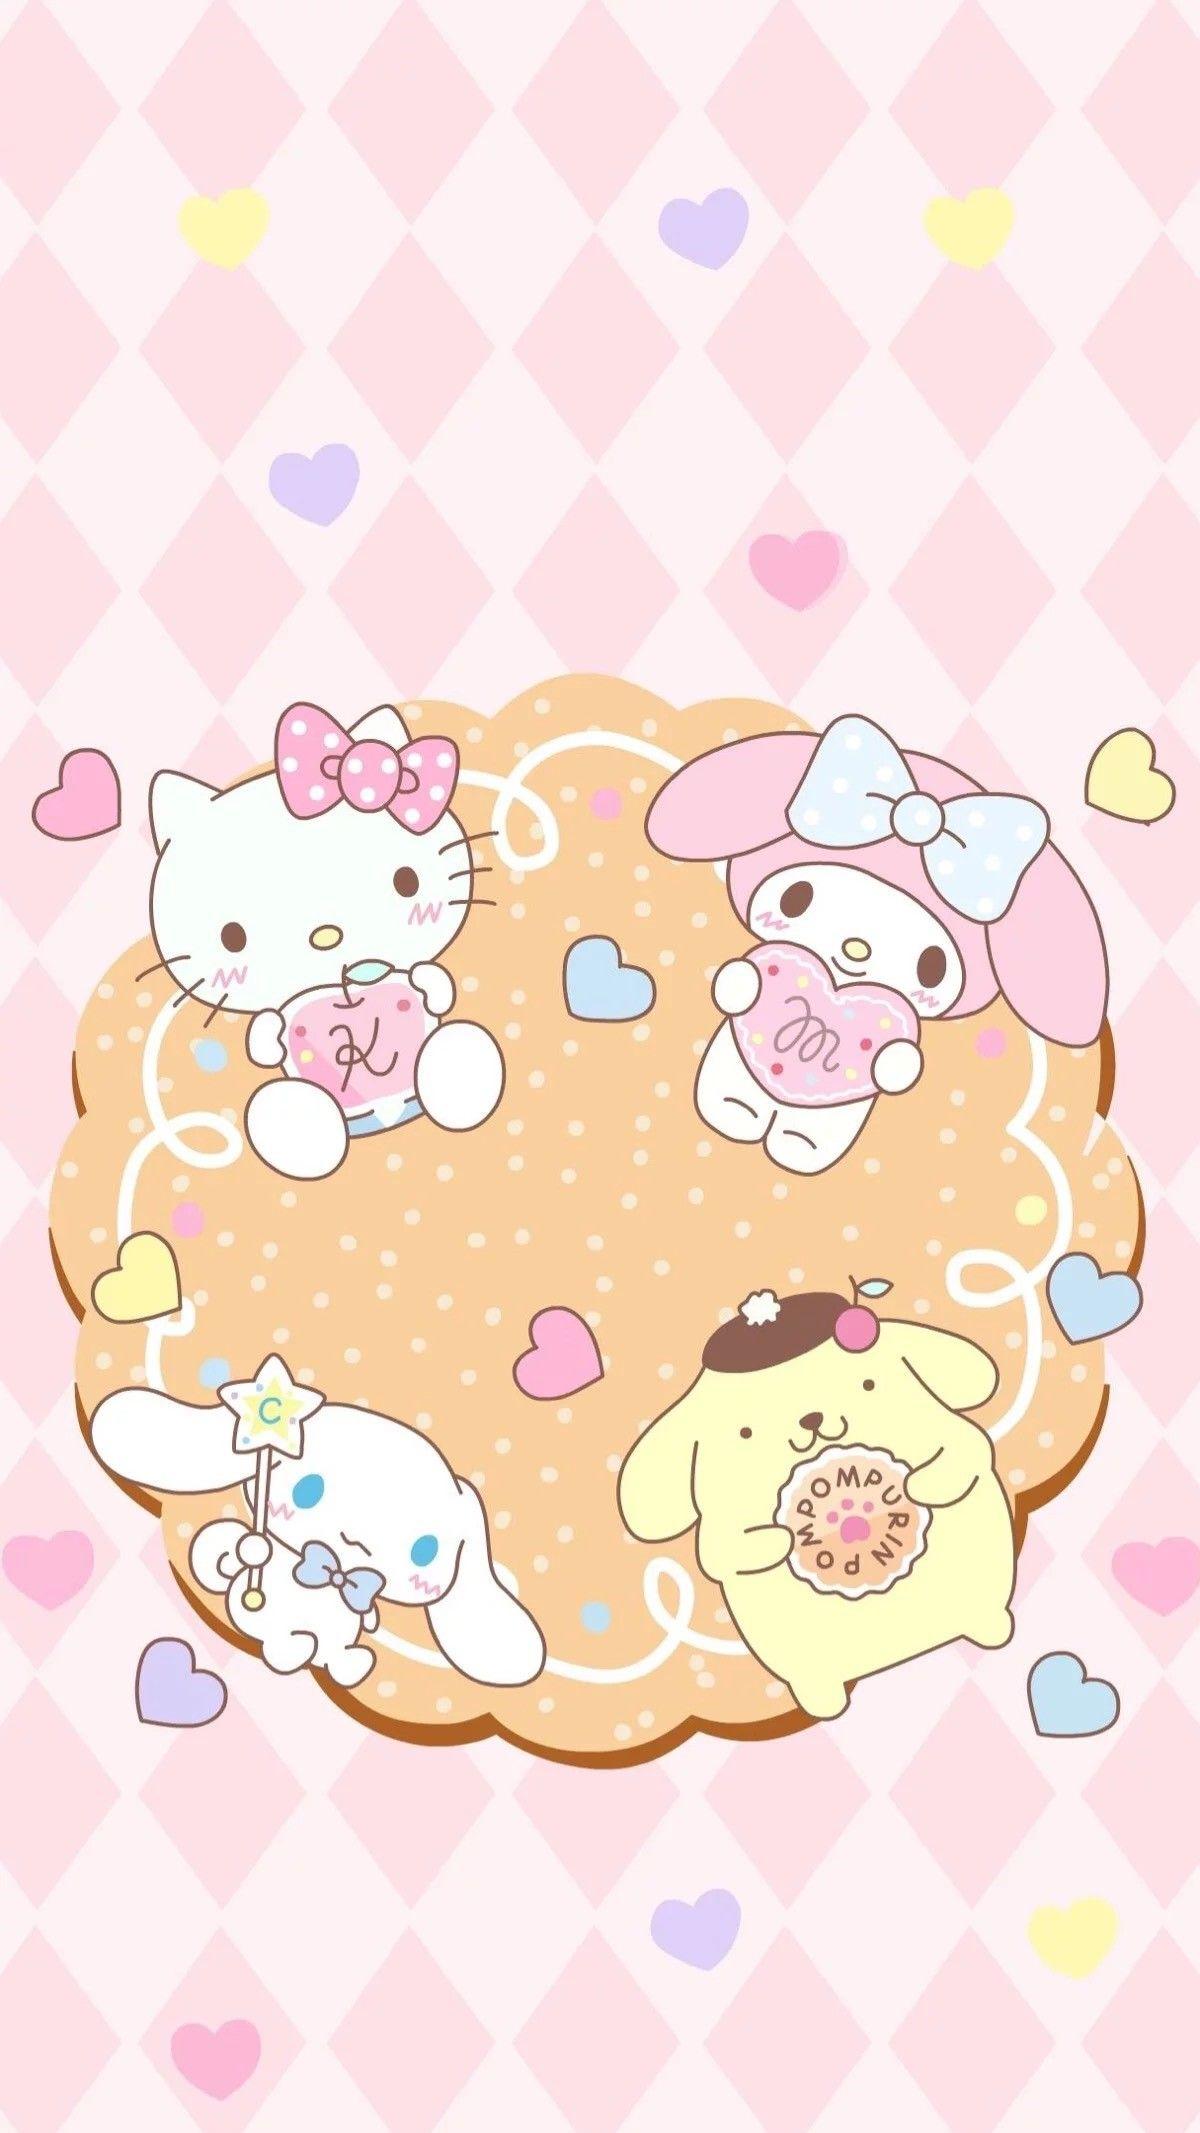 Sanrio Pom Pom Purin and Macaron Wallpaper